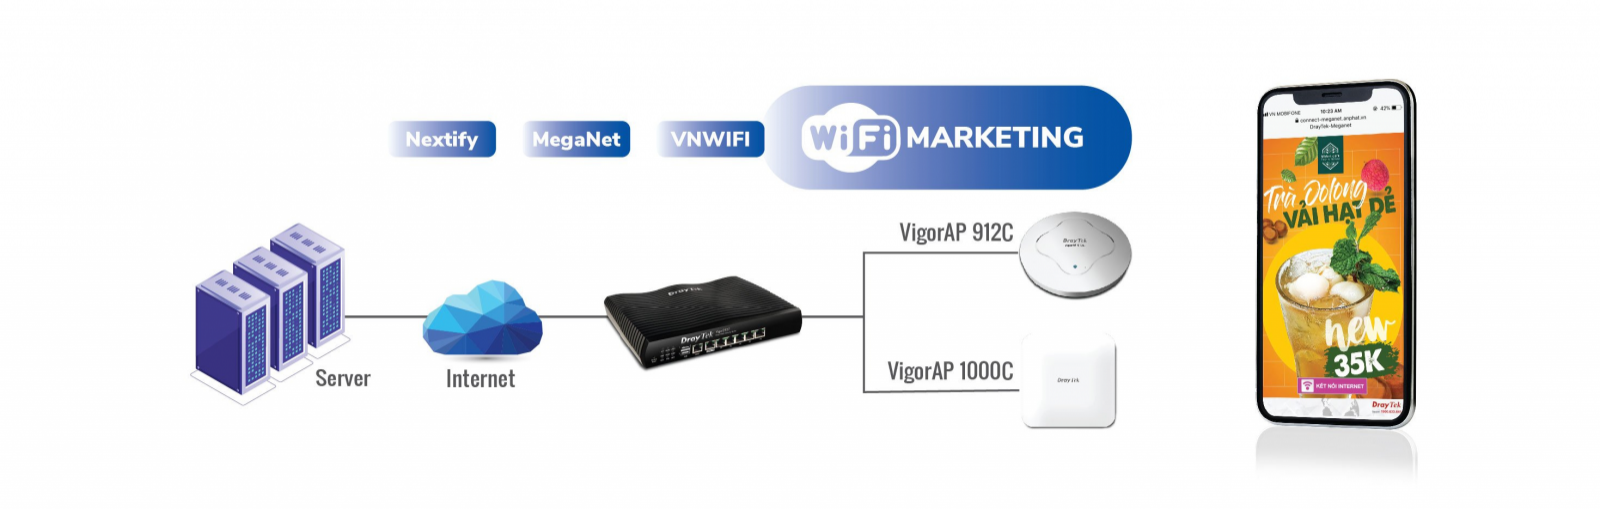 Router Draytek Vigor2927 Wi-Fi Marketing